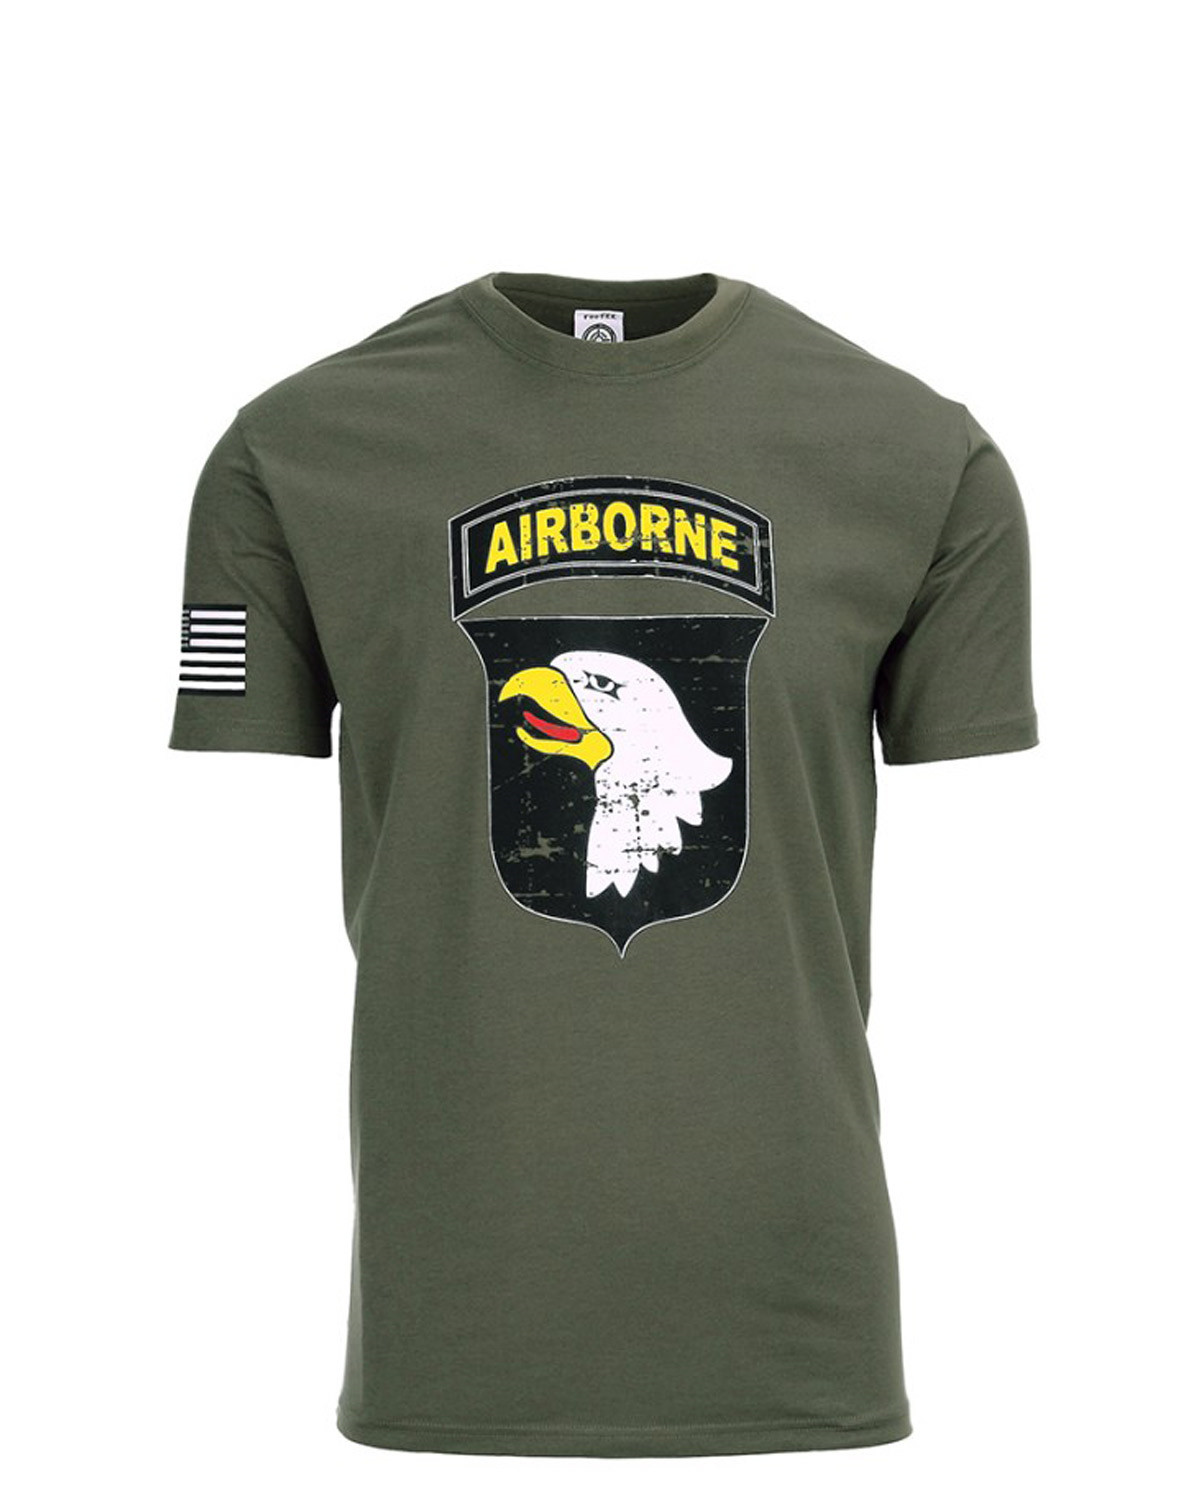 Fostex T-shirt USA 101st Airborne (Grön, 2XL) 2XL Grön